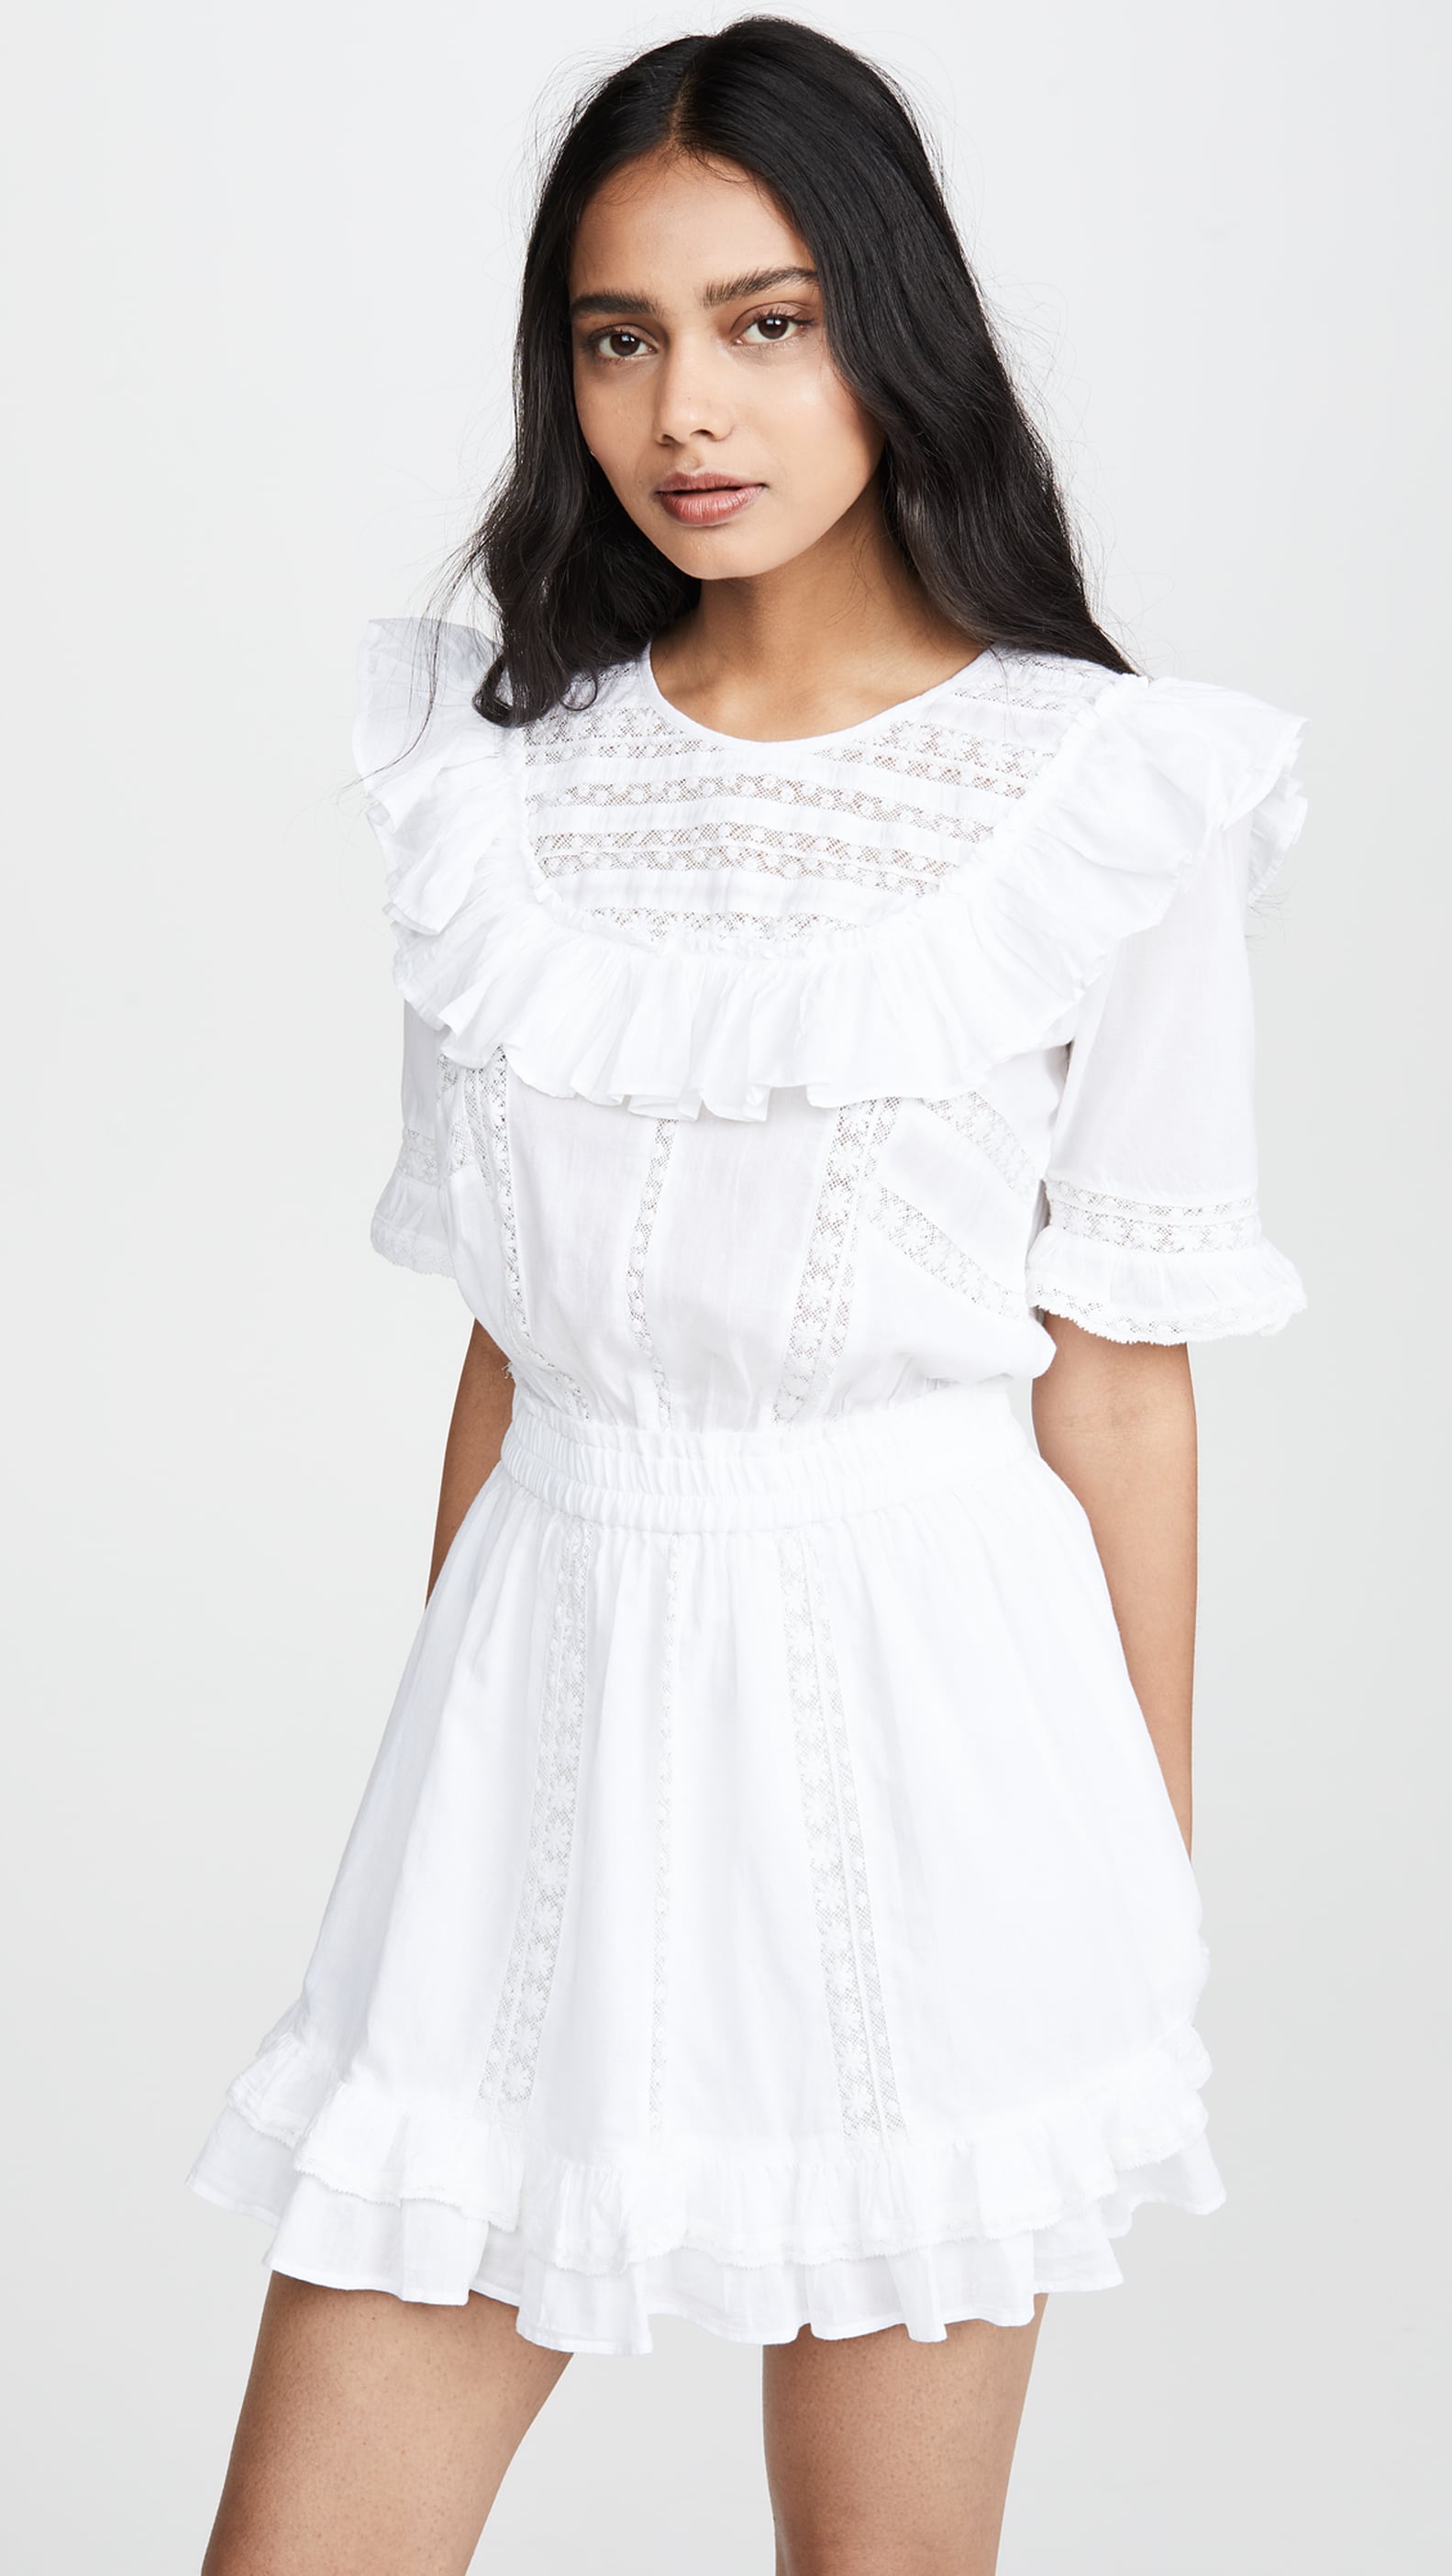 Affordable Wedding Dresses From Shopbop | POPSUGAR Fashion